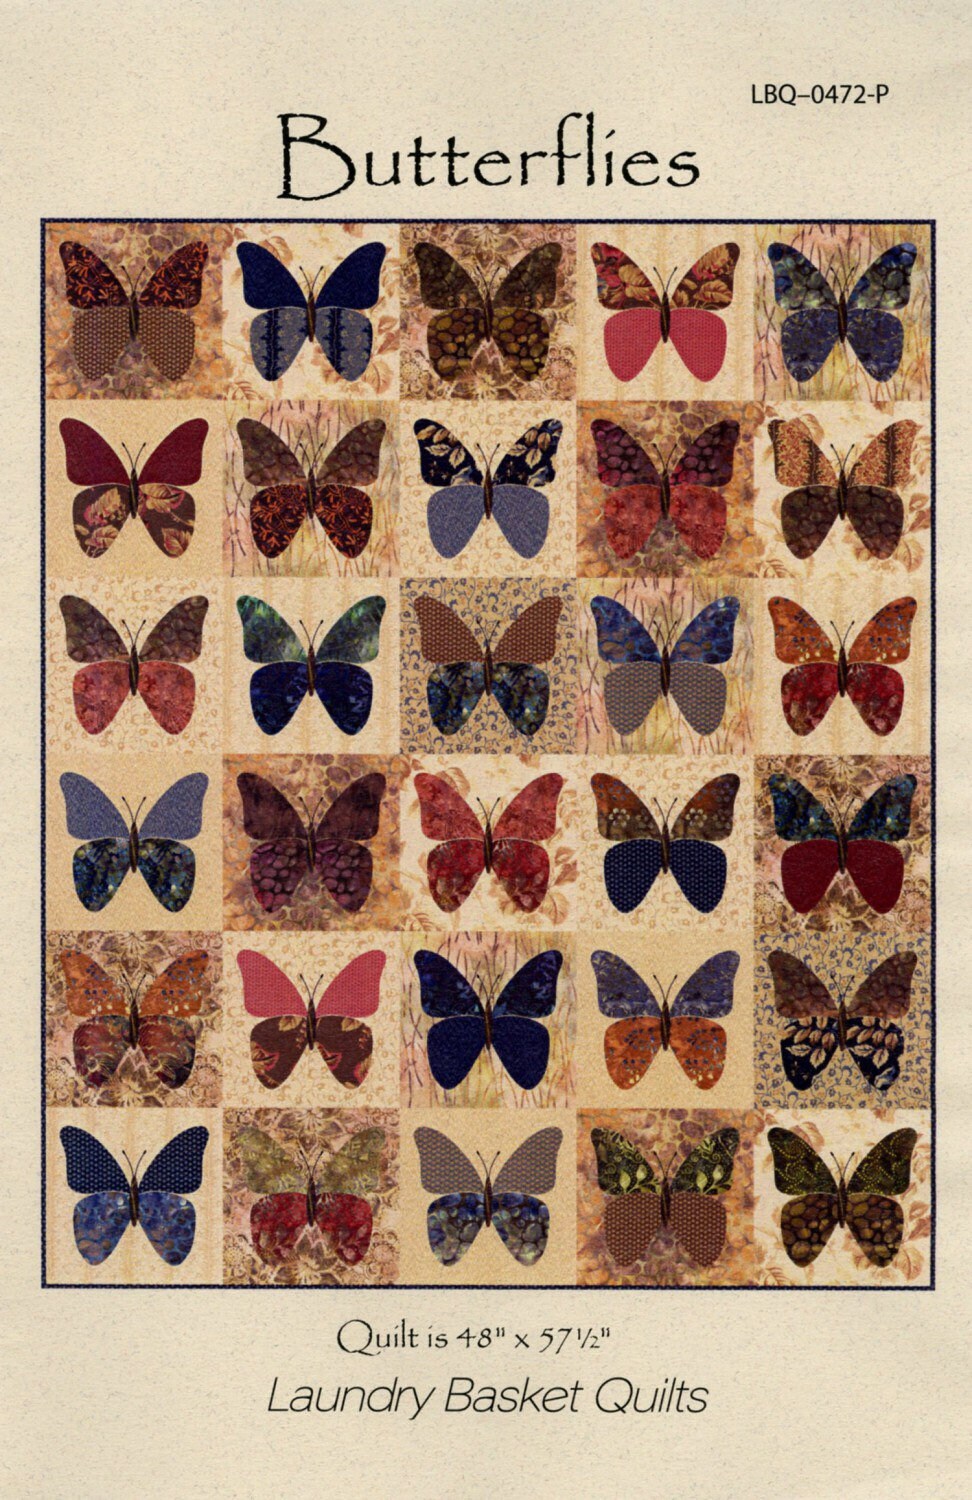 Butterflies Quilt Pattern - Laundry Basket Quilts - Edyta Sitar - Applique Quilt Pattern